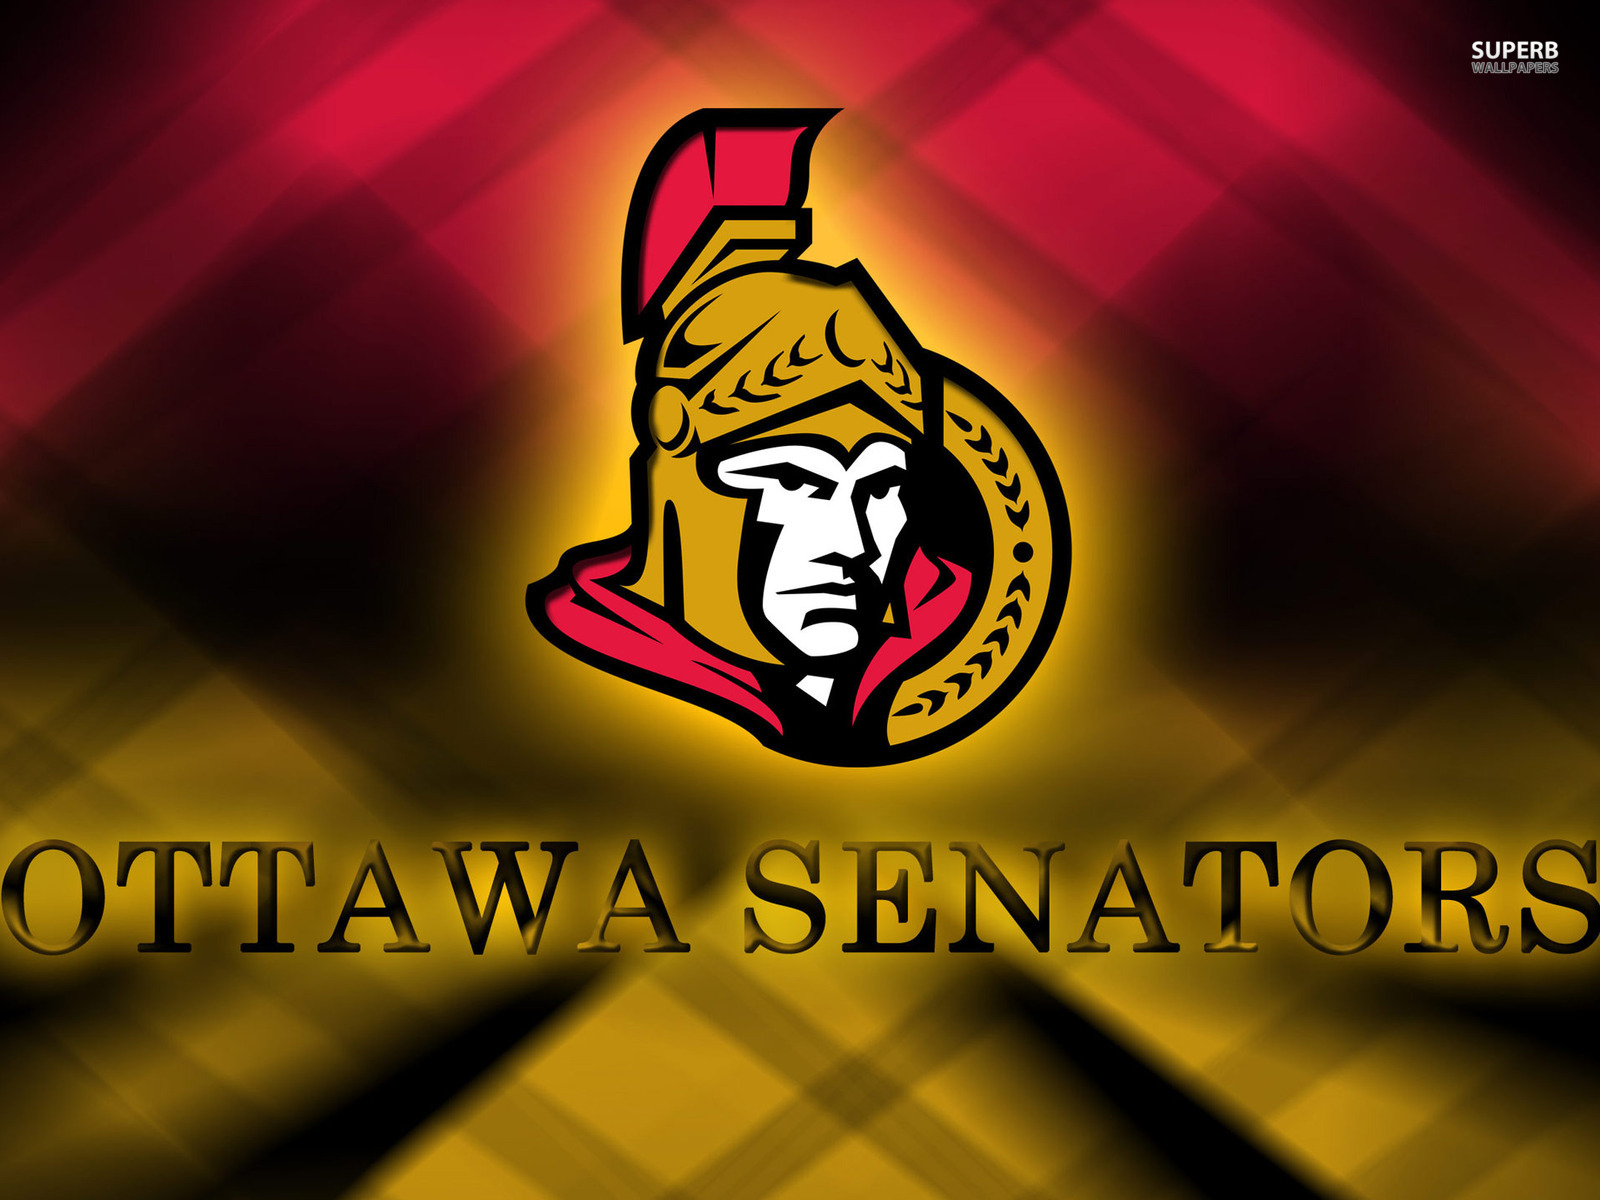 Check This Out Our New Ottawa Senators Wallpaper